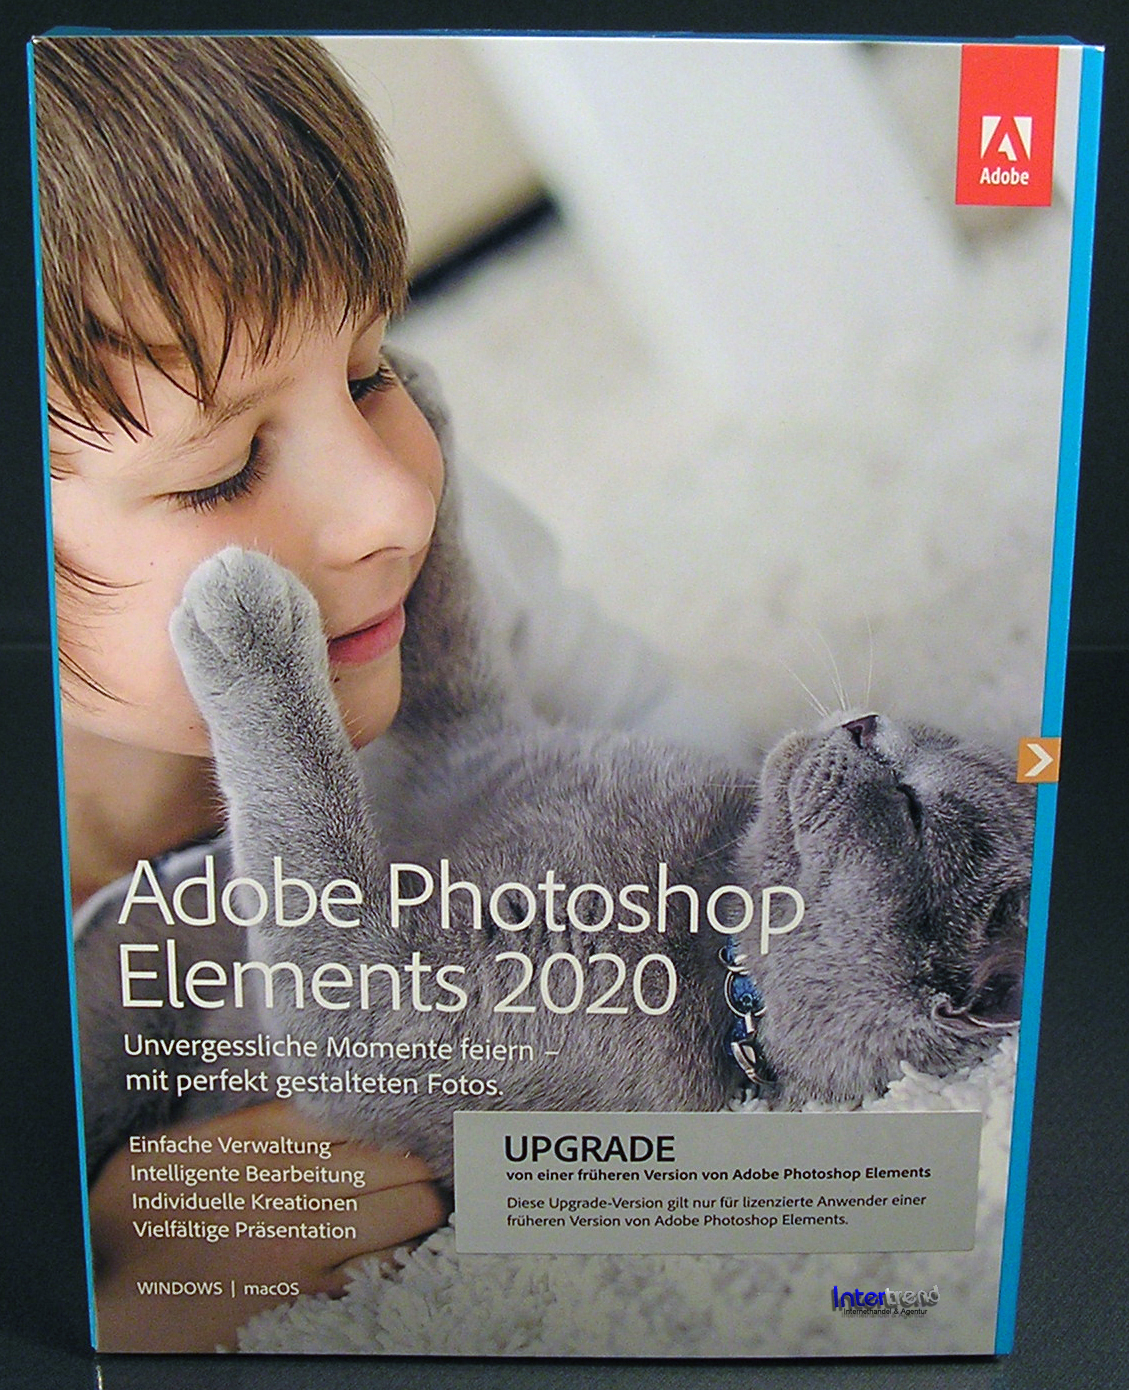 Adobe Photoshop Elements 2020 Upgrade 2 Win/Mac + benutzhandbuch